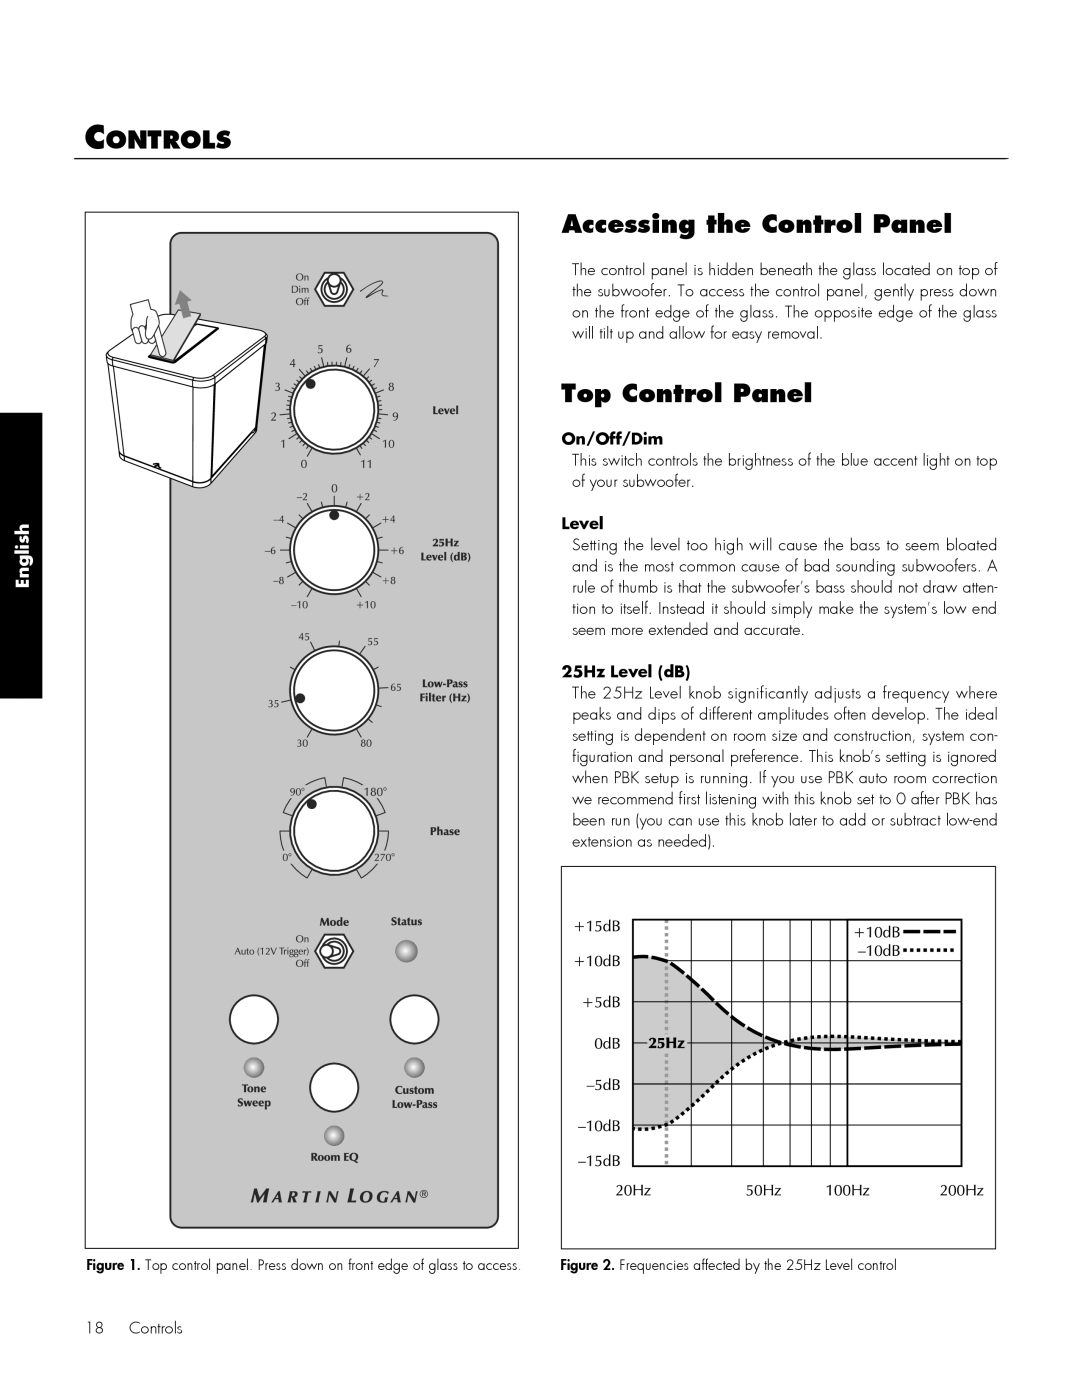 MartinLogan 210, 212 user manual Accessing the Control Panel, Top Control Panel, Controls, English 